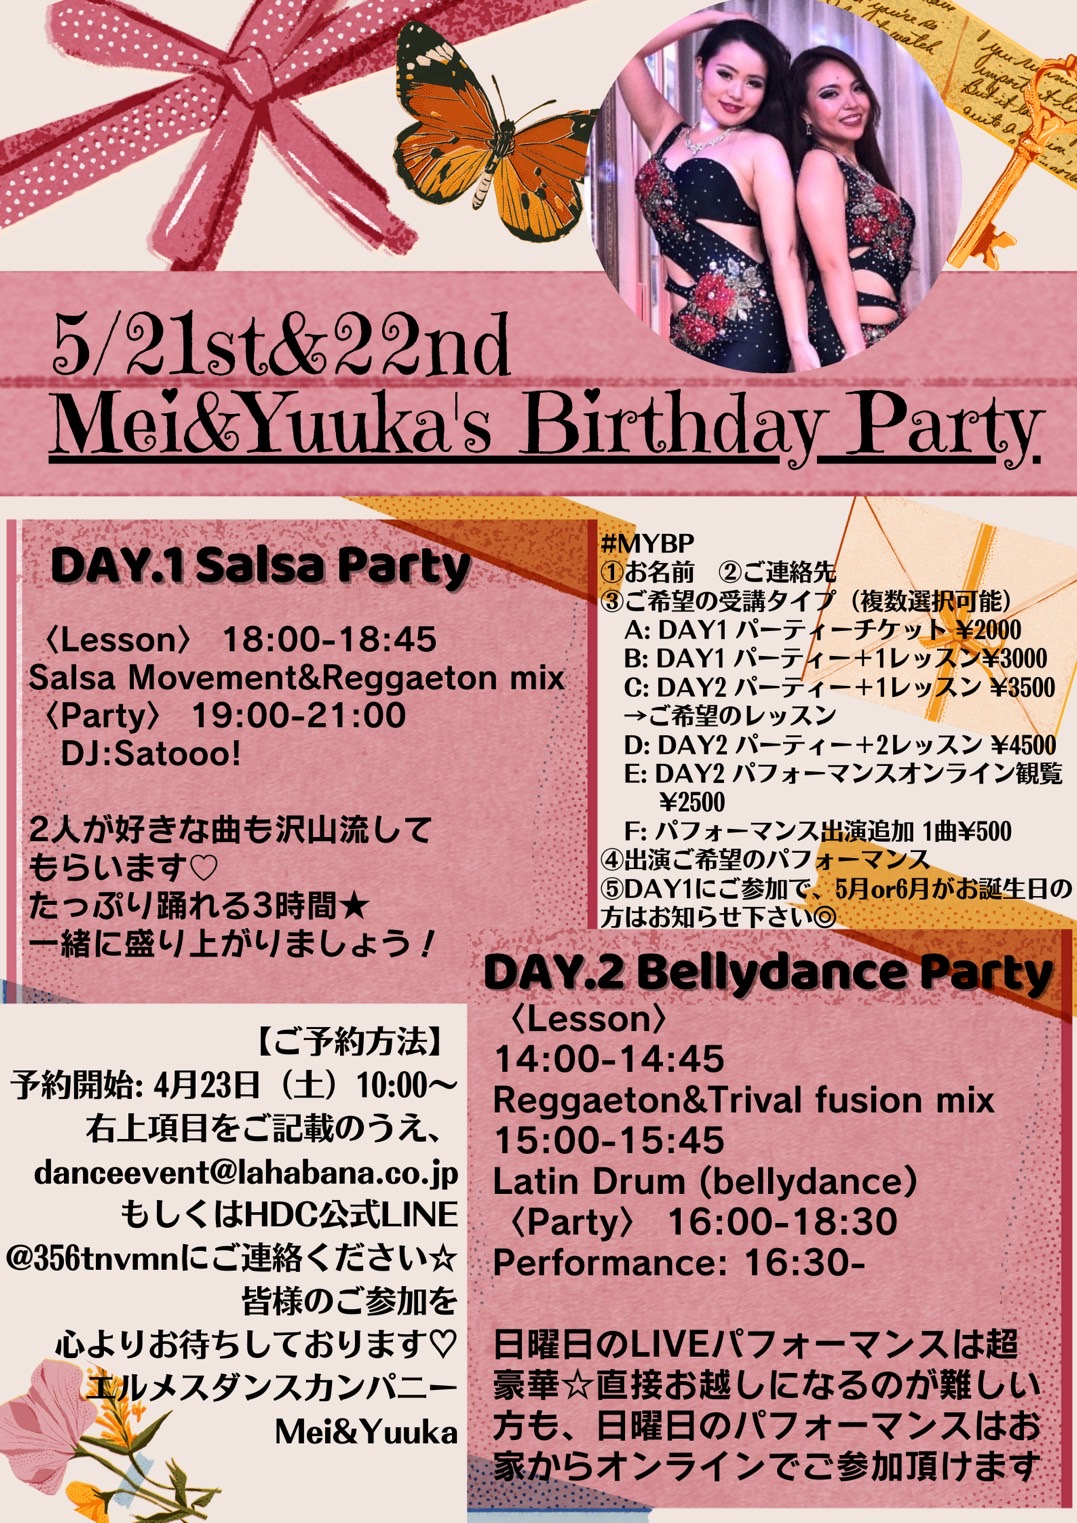 Mei&Yuuka’s Birthday Party!開催のお知らせ #MYBP